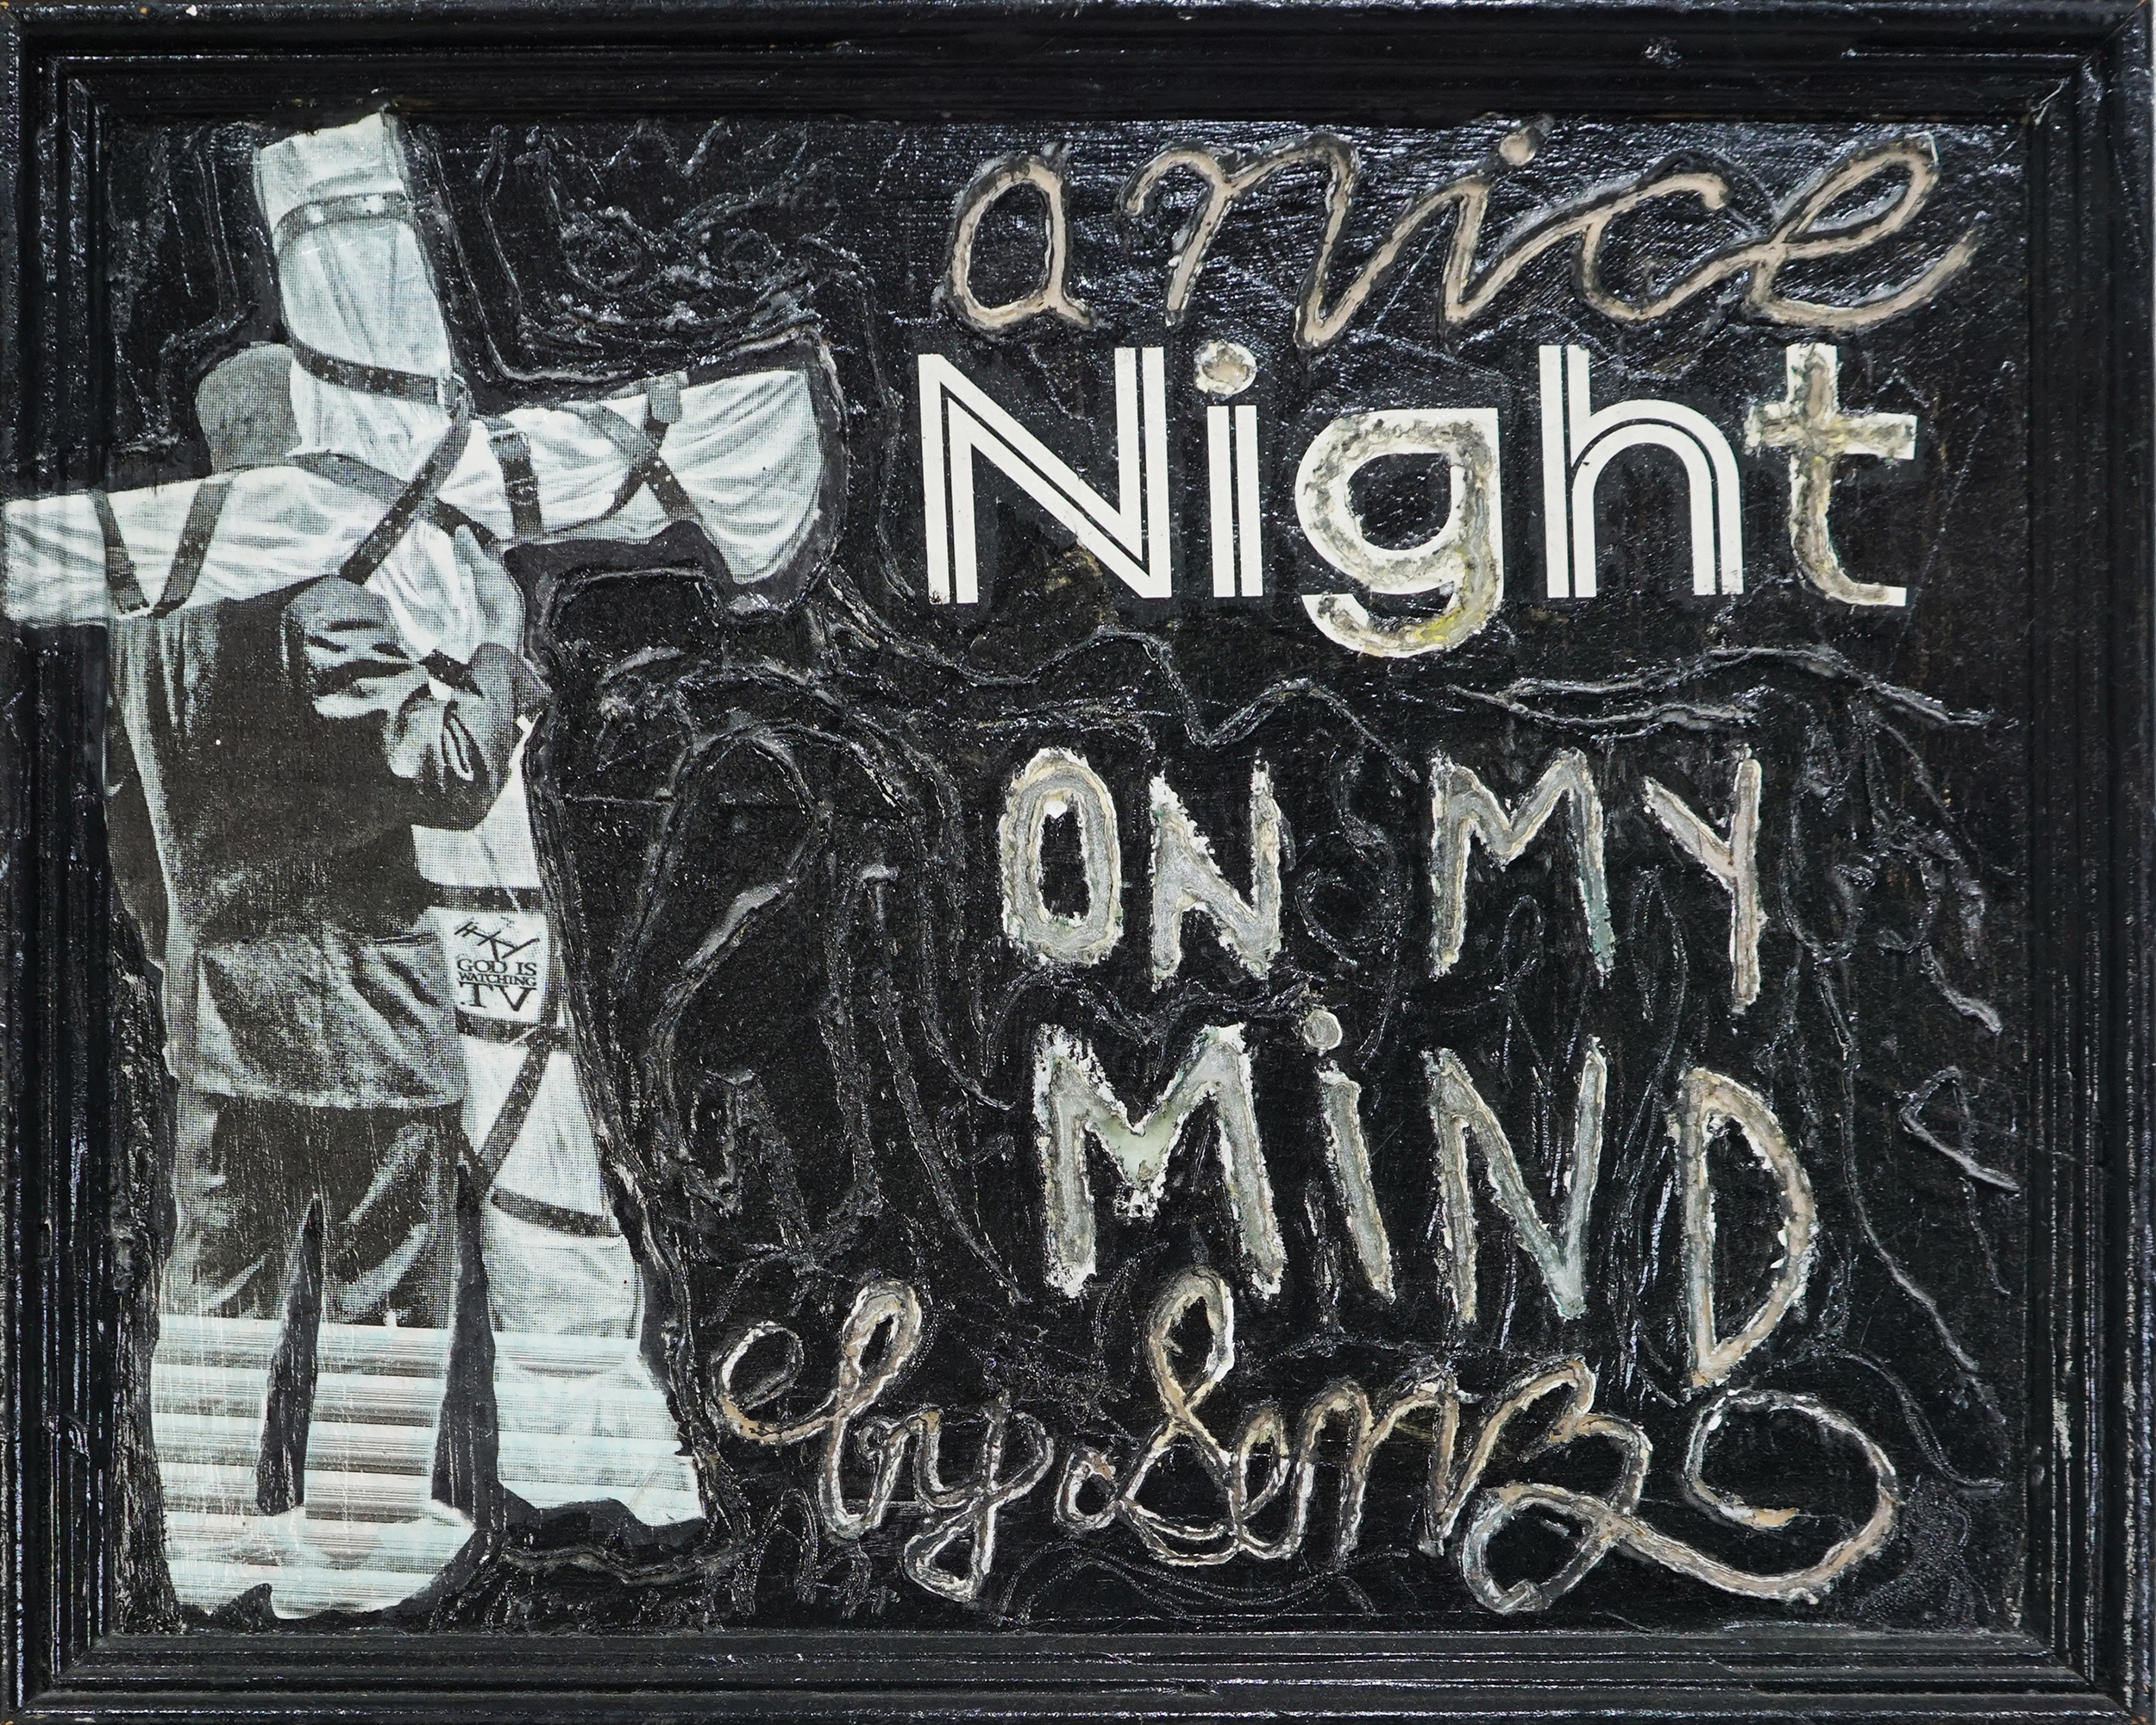 A nice night on my mind, 2015 - Oil, paper on glass - 11.5" x 13" (29 x 33cm)